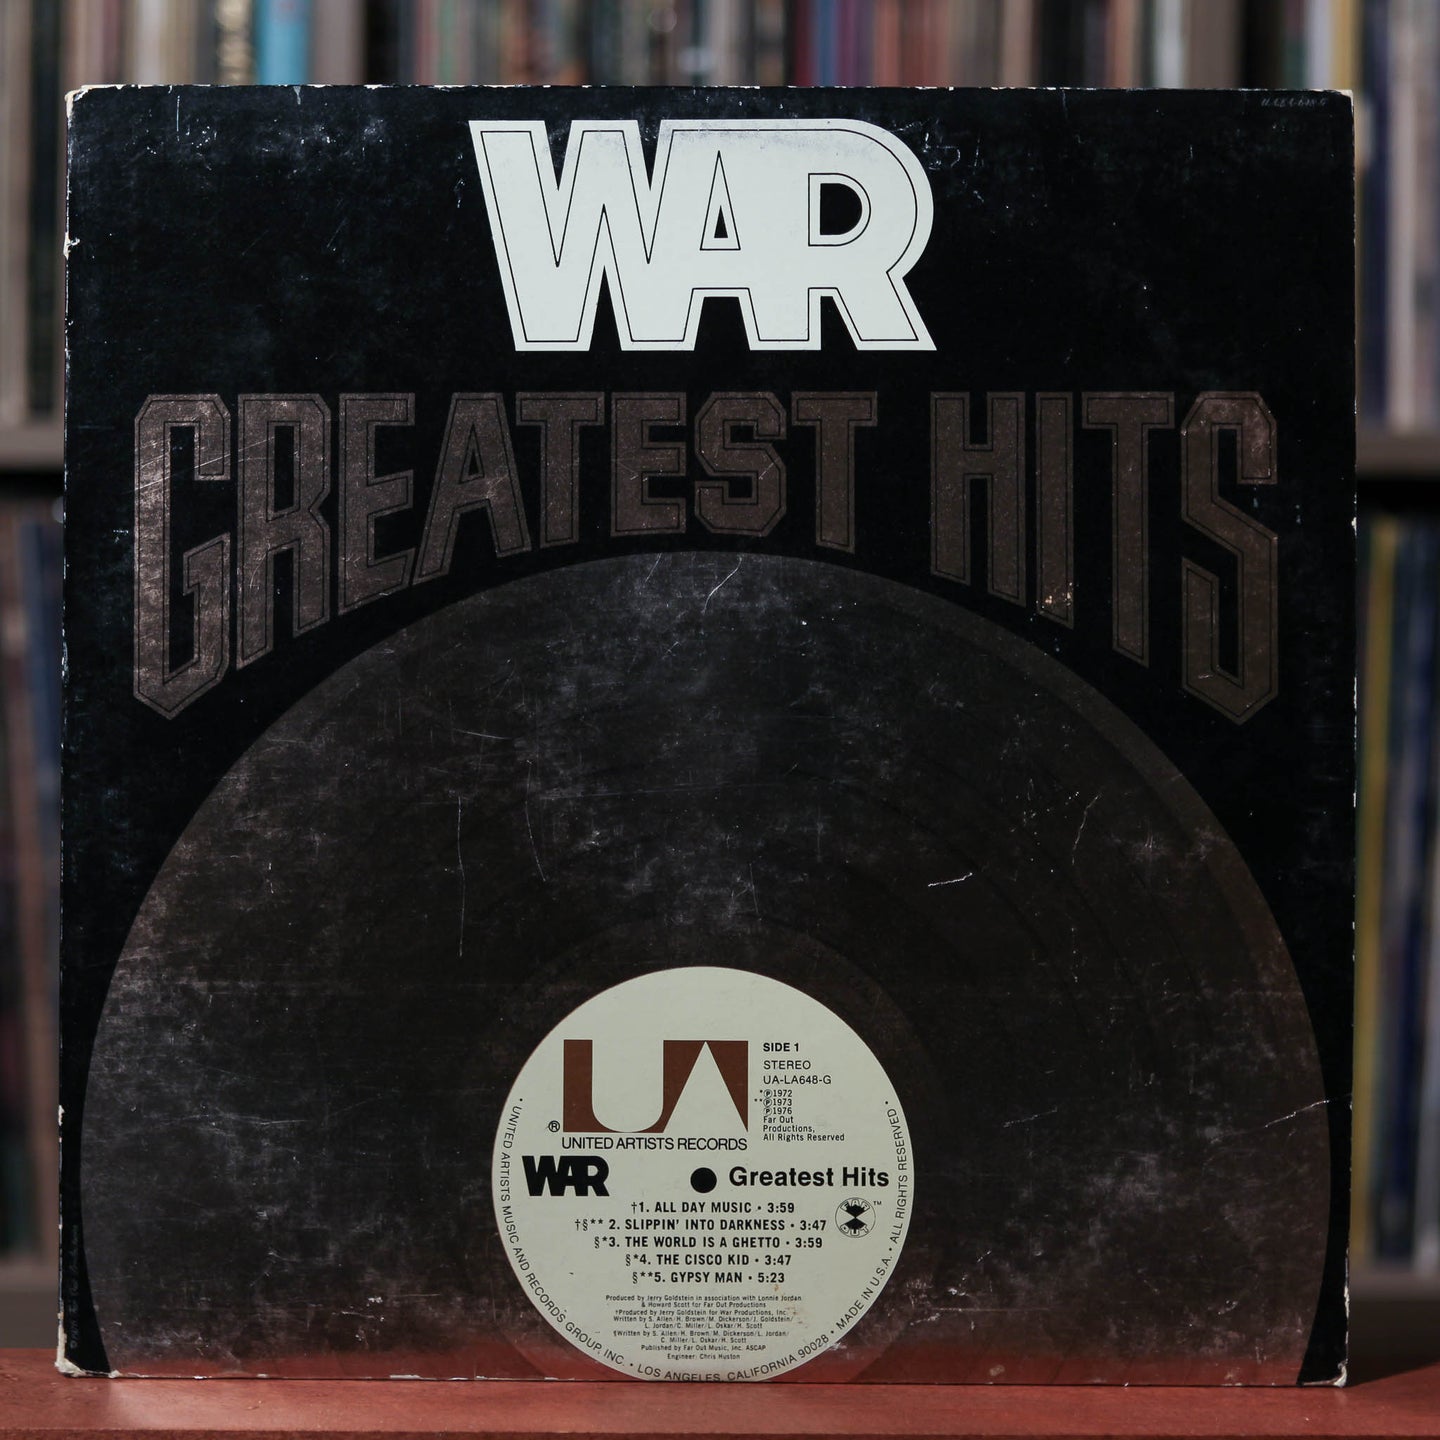 War - Greatest Hits - 1976 UA, VG/VG